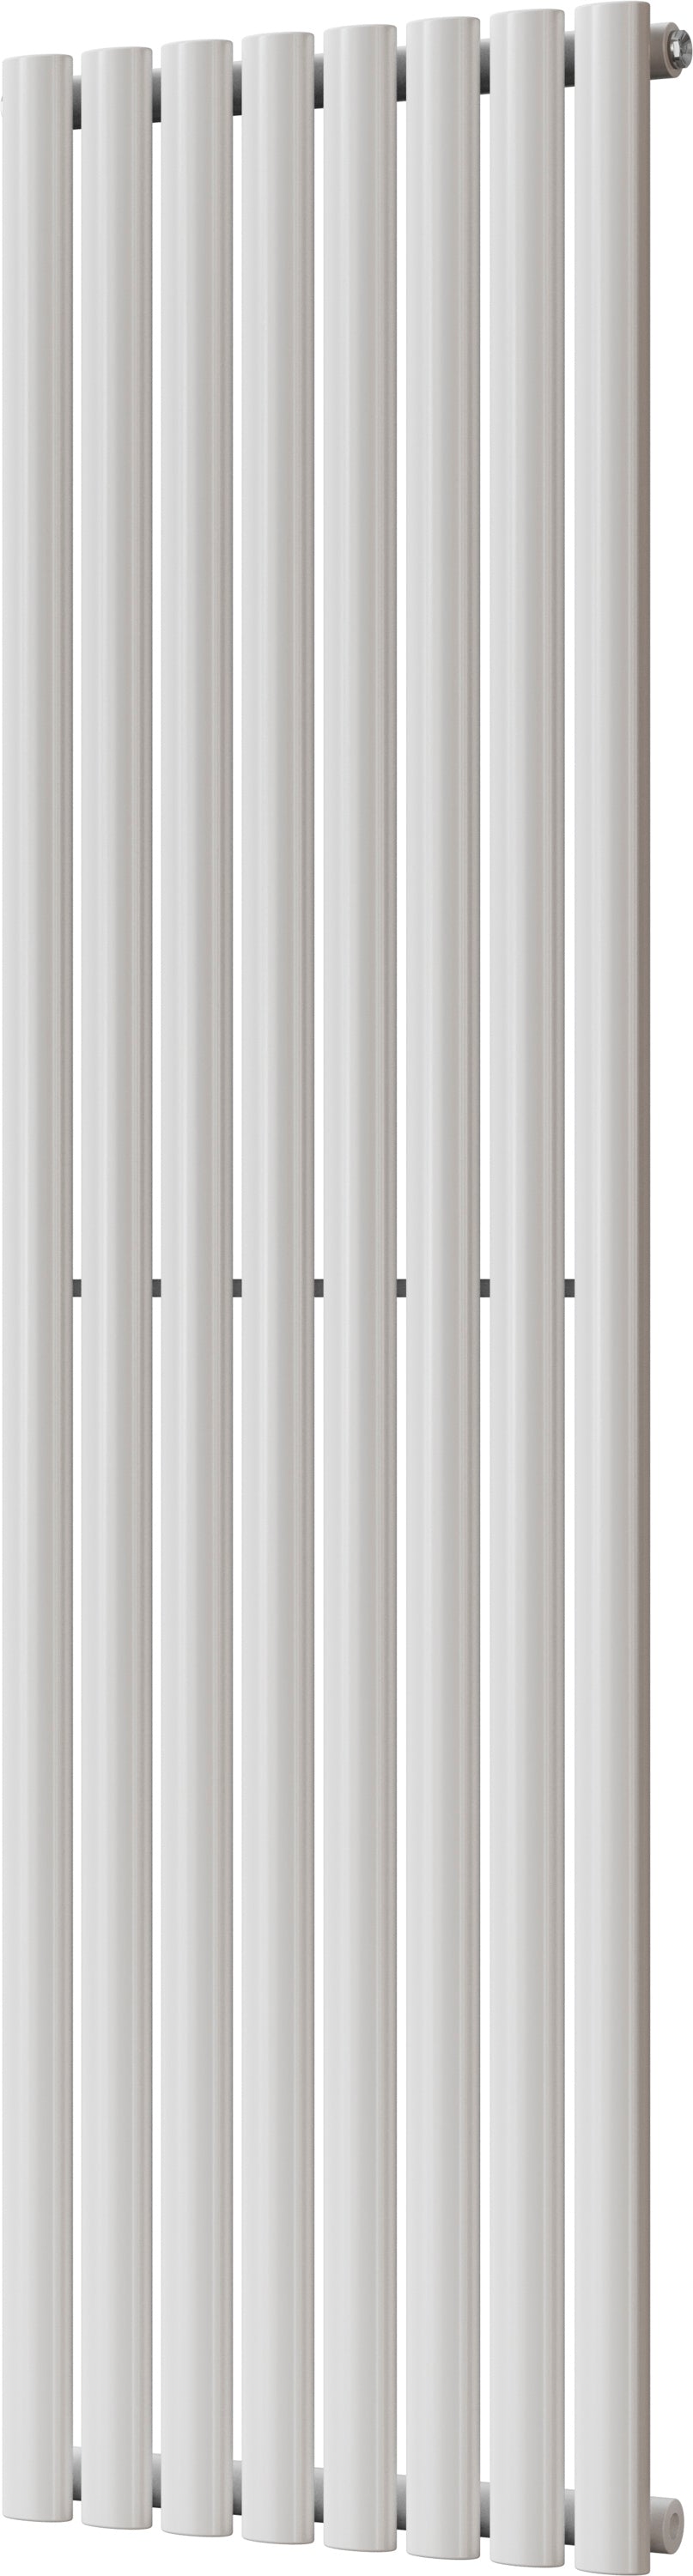 Omeara - White Vertical Radiator H1600mm x W464mm Single Panel